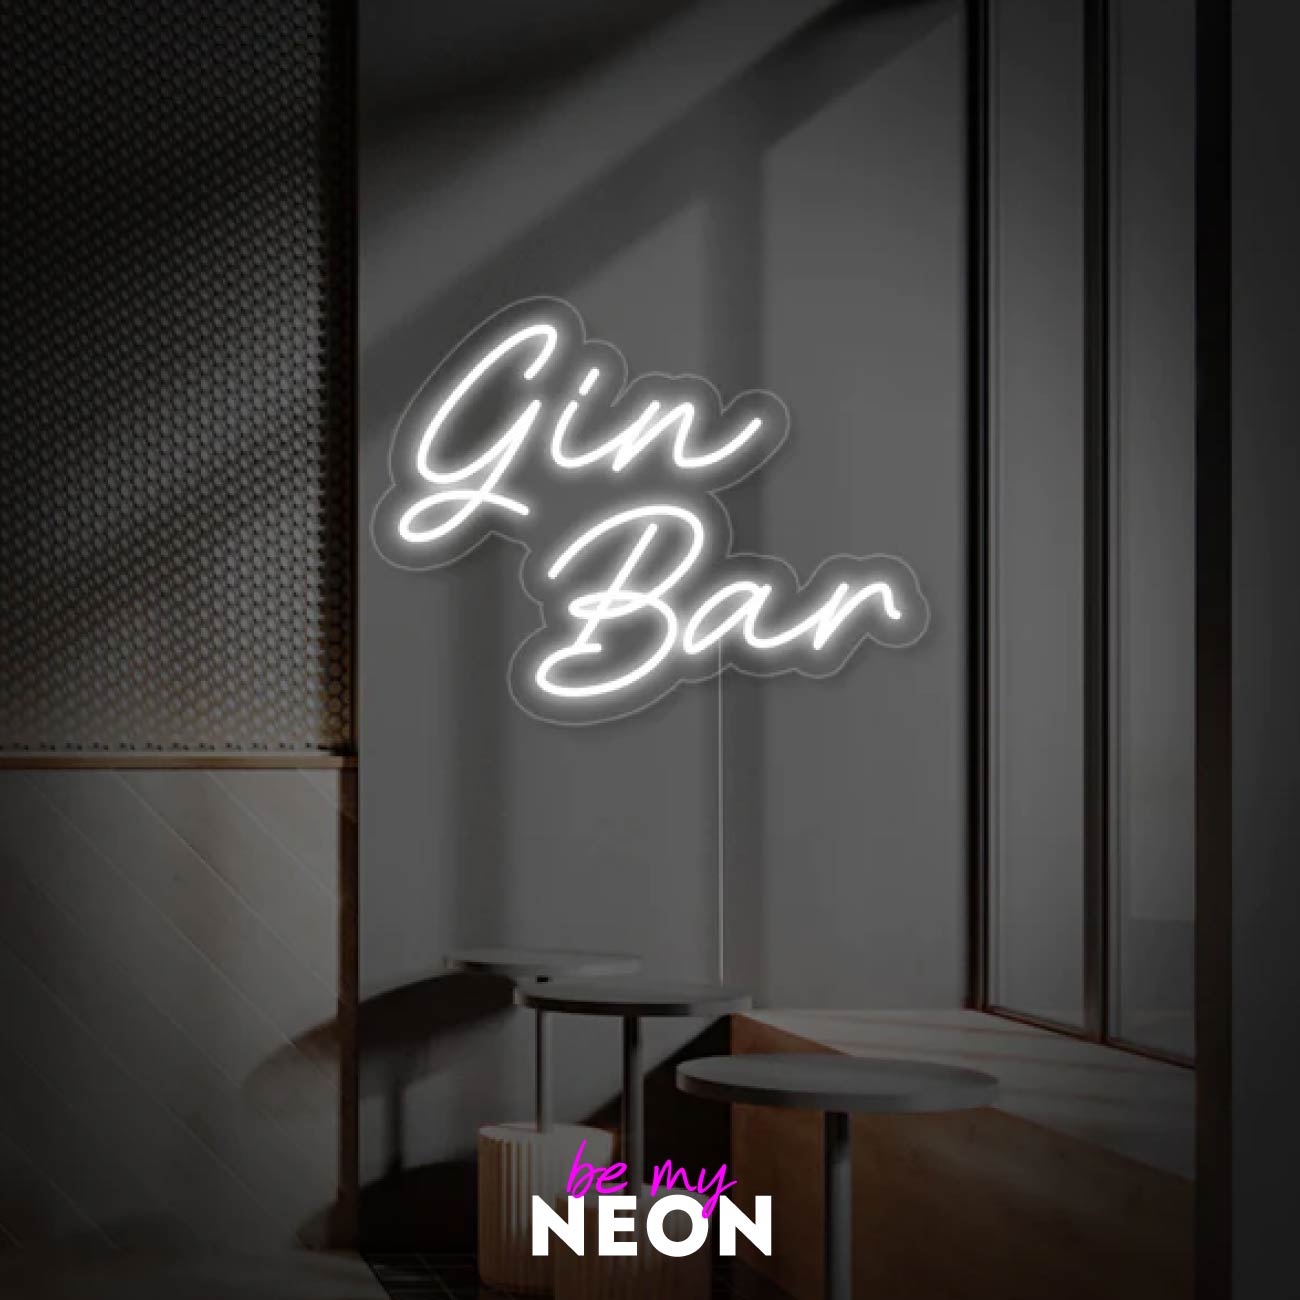 "Gin Bar - Bar Club Party" LED Neonschild